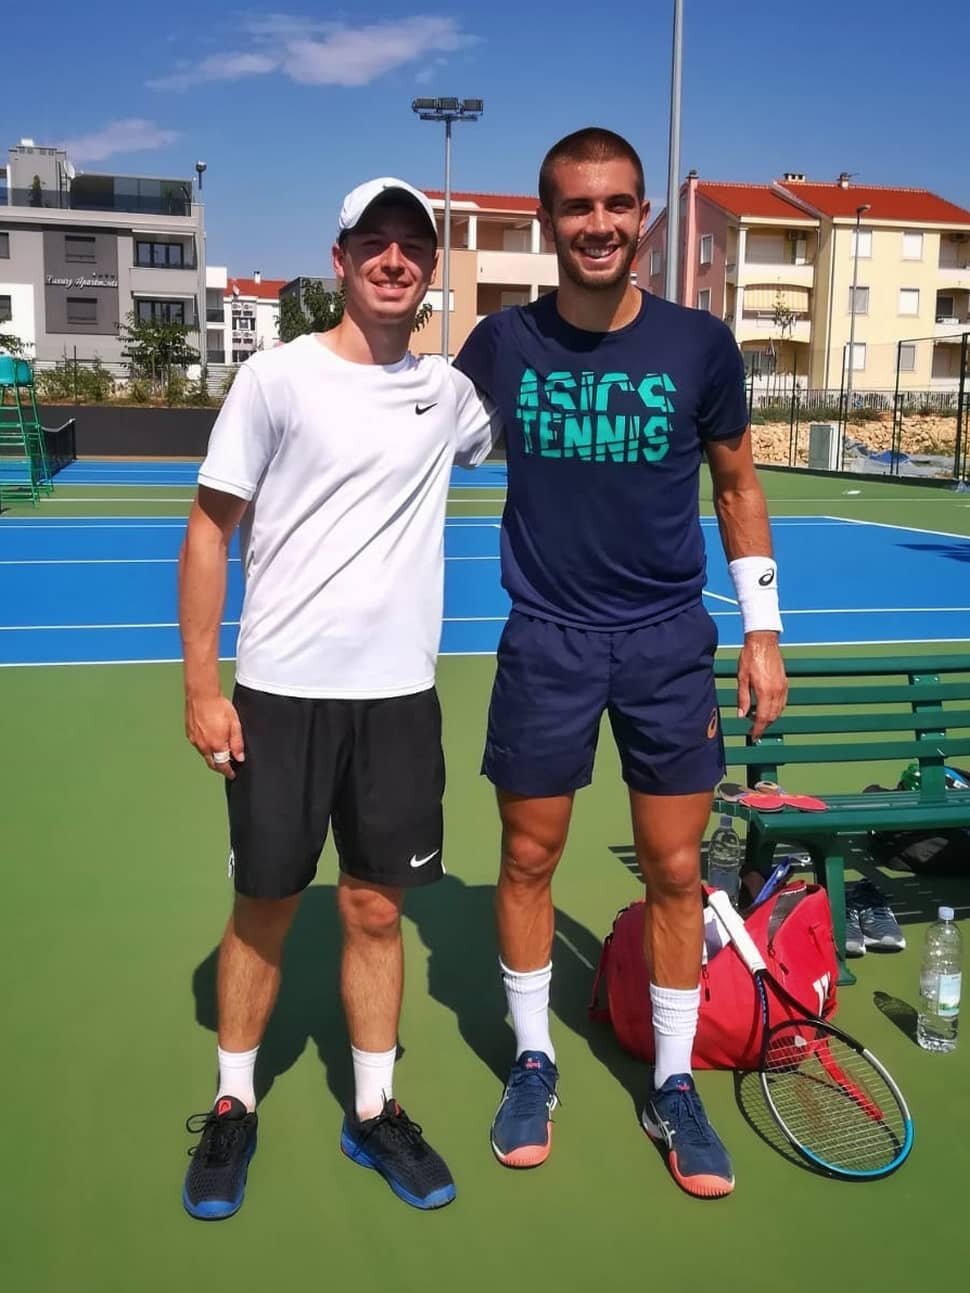 Croatian tennis player Borna Ćorić warm up session with Eliot Glaysher courtesy of Tennis Holidays Croatia in Zadar @ Športski centar Višnjik